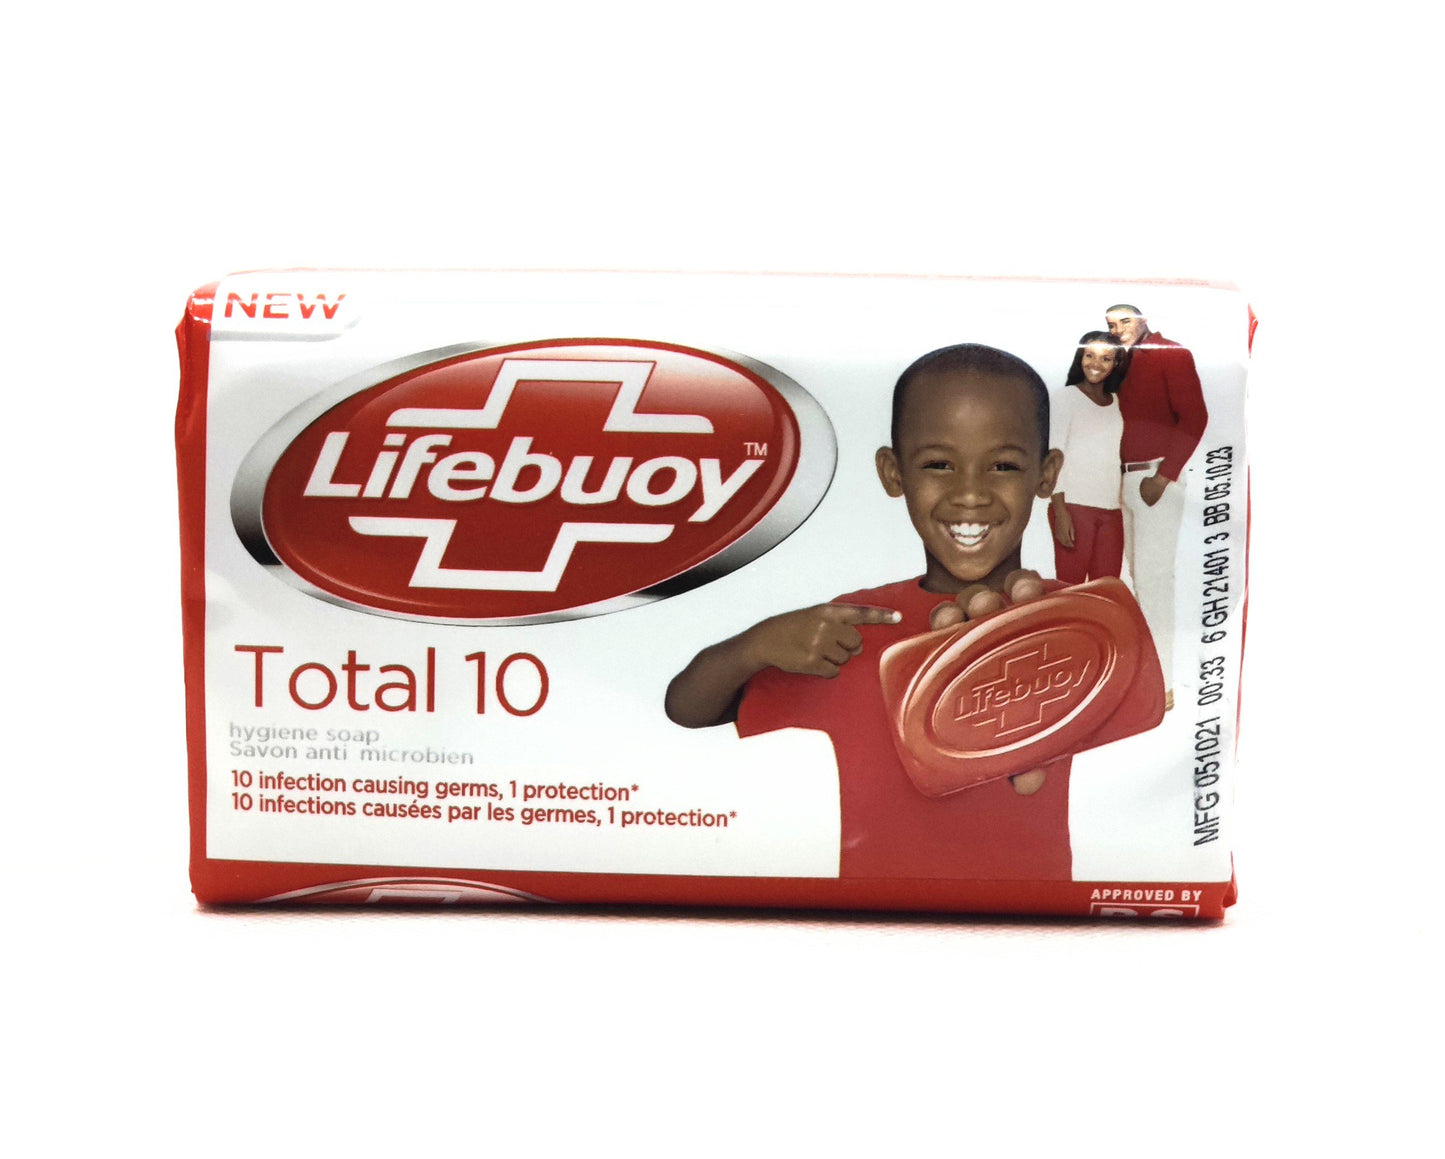 175 gram bar of lifebuoy total 10 soap